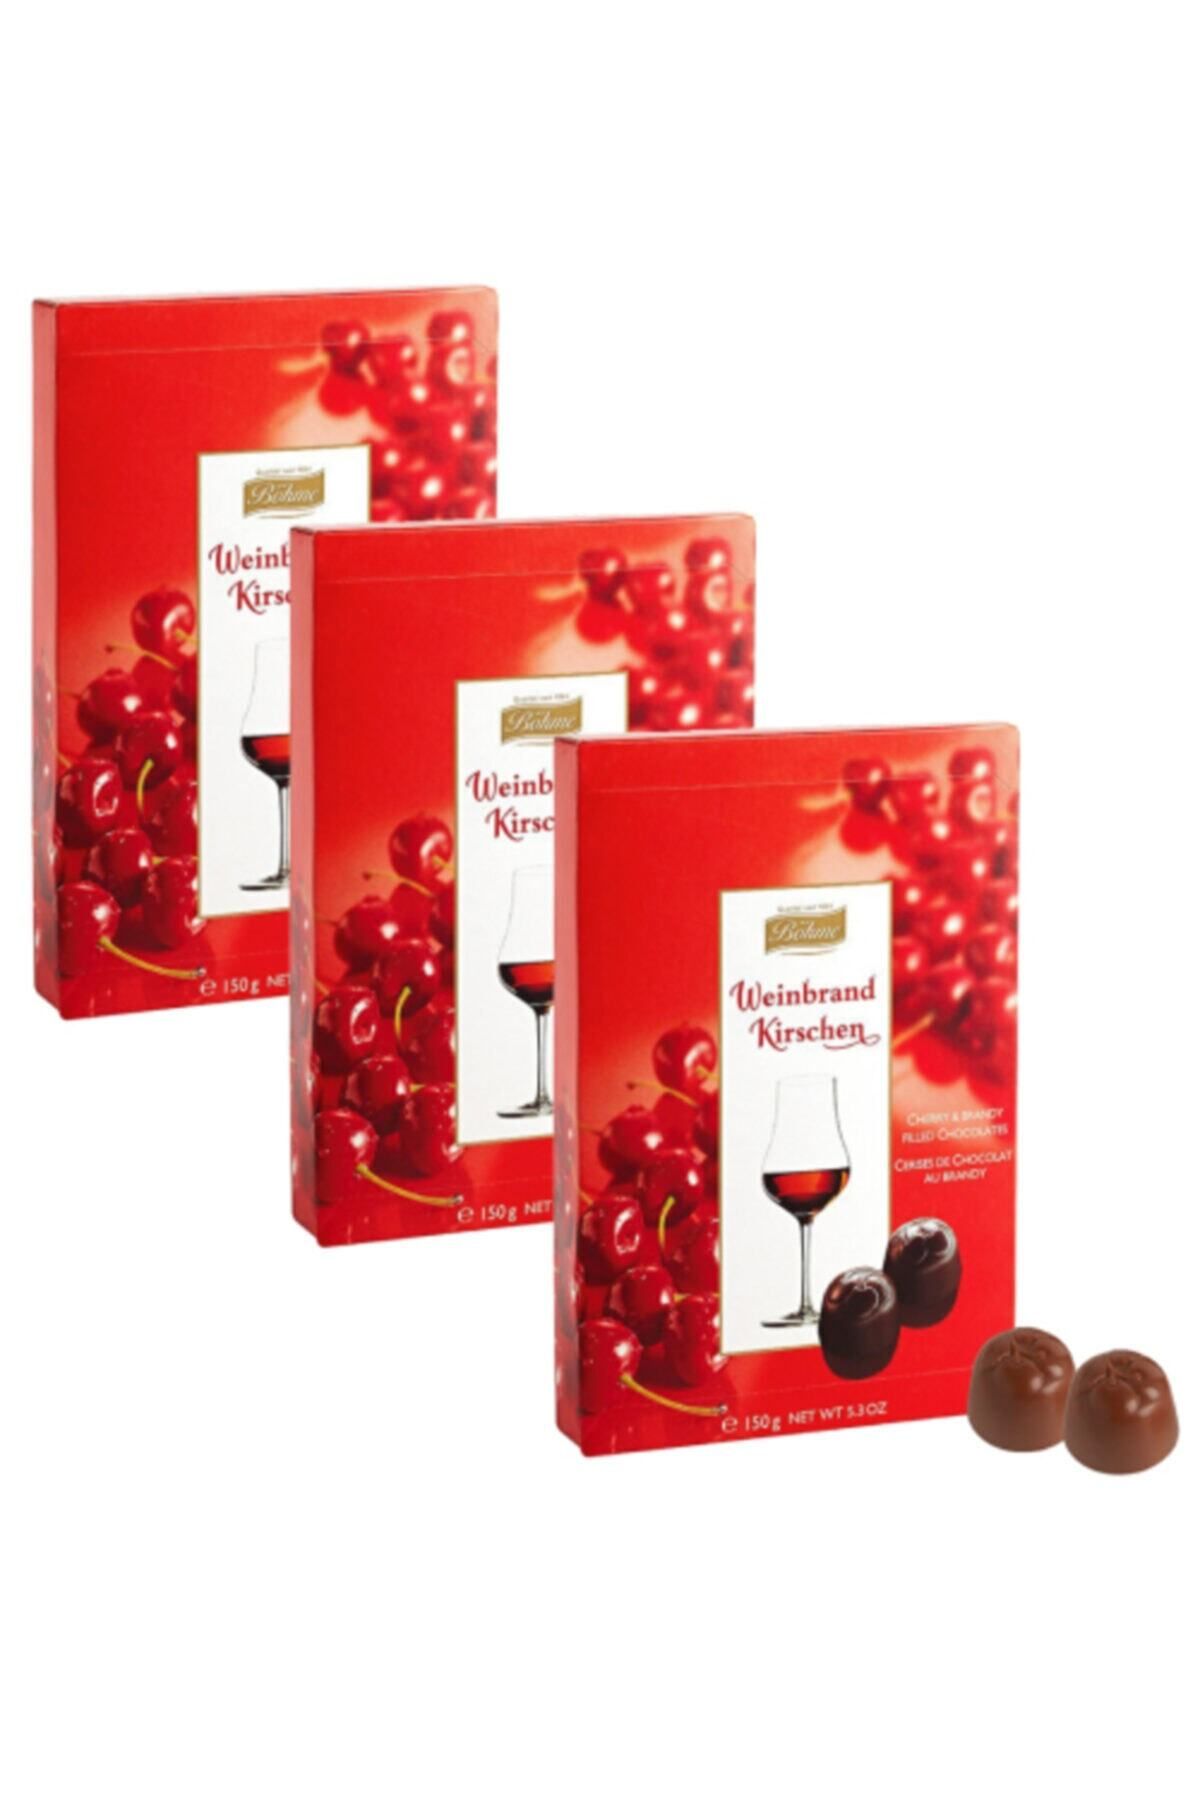 Böhme Weinbrand Vişne Likörlü Brandi Çikolata Alkollü Ithal Çikolata 3 Adet Kampanya Paket